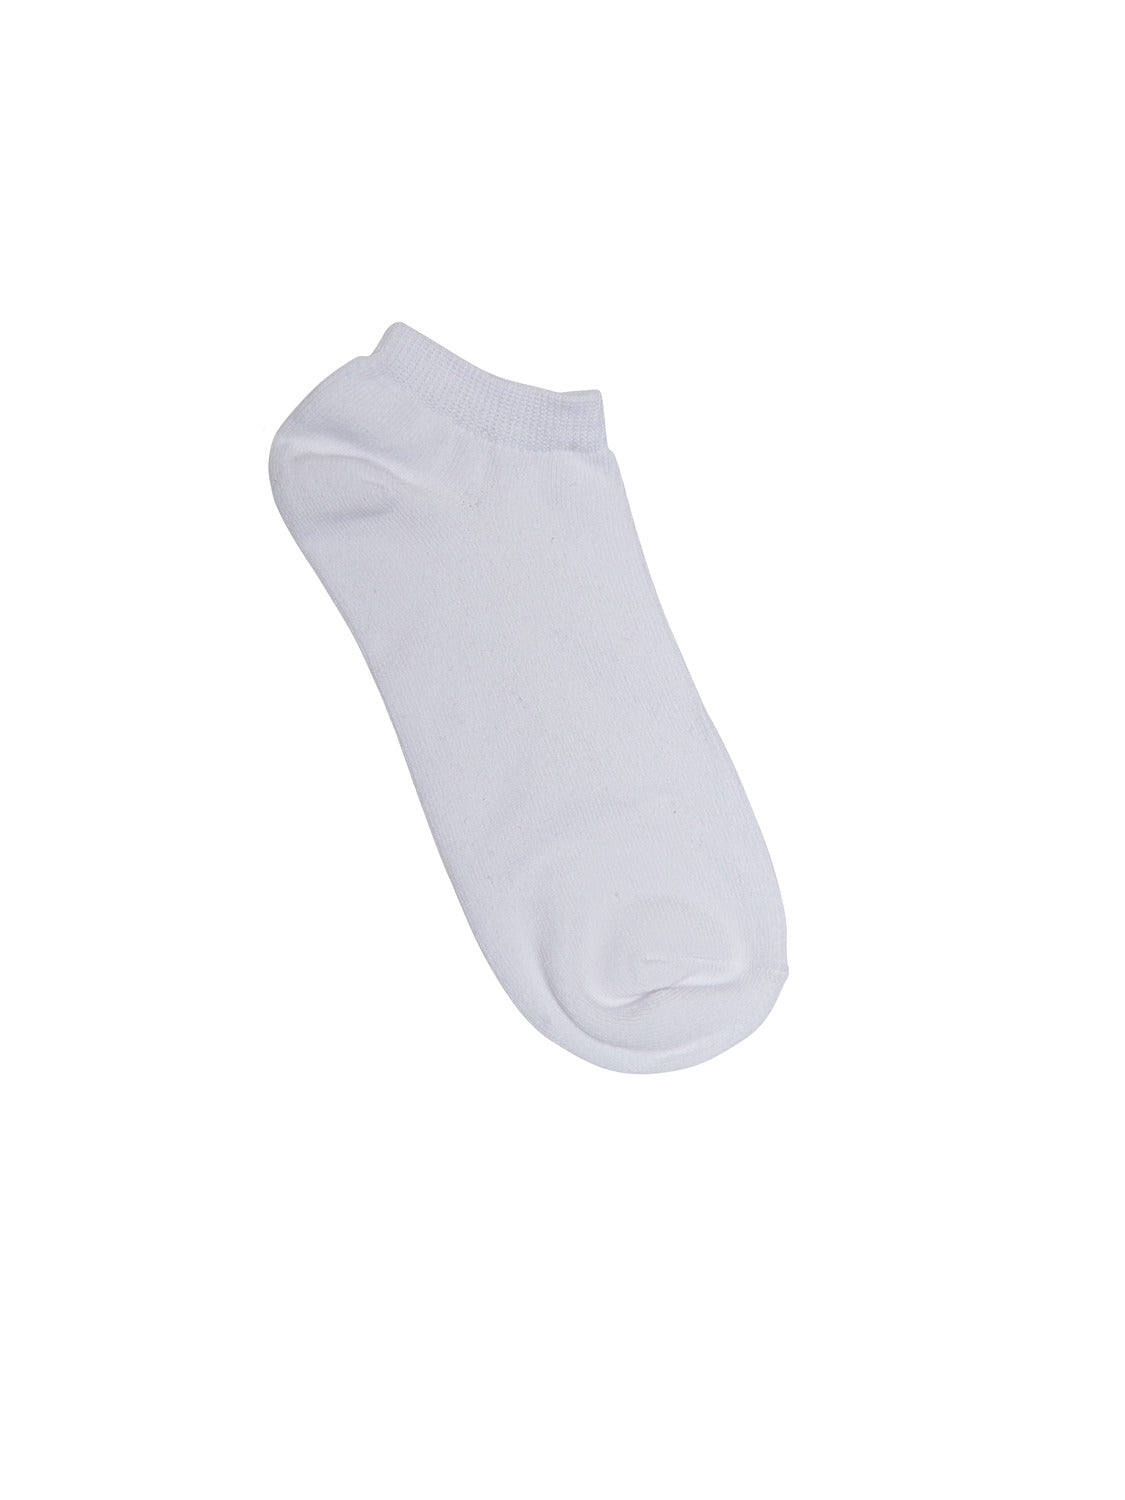 JJDONGO Short Sock - White